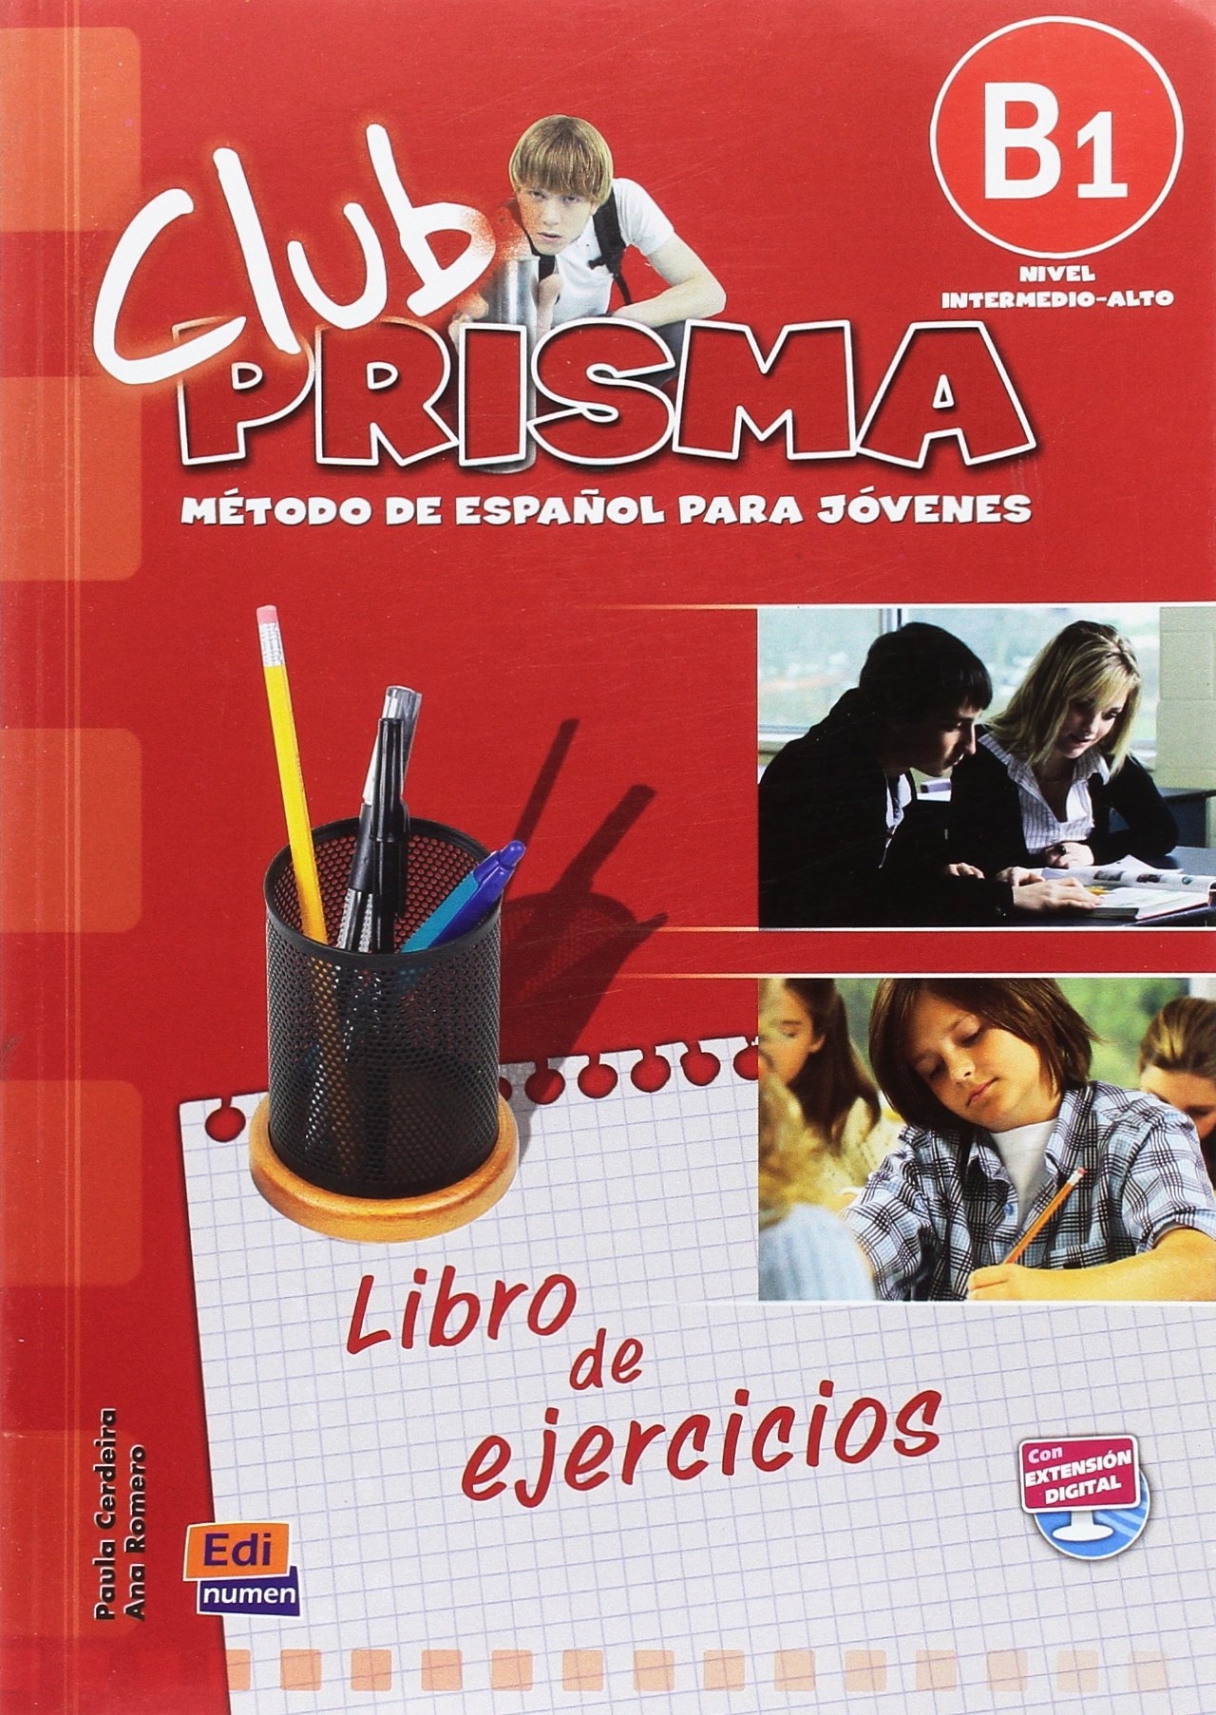 Координатор проекта: Maria Jose Gelabert - Club Prisma Nivel B1 - Libro de ejercicios 